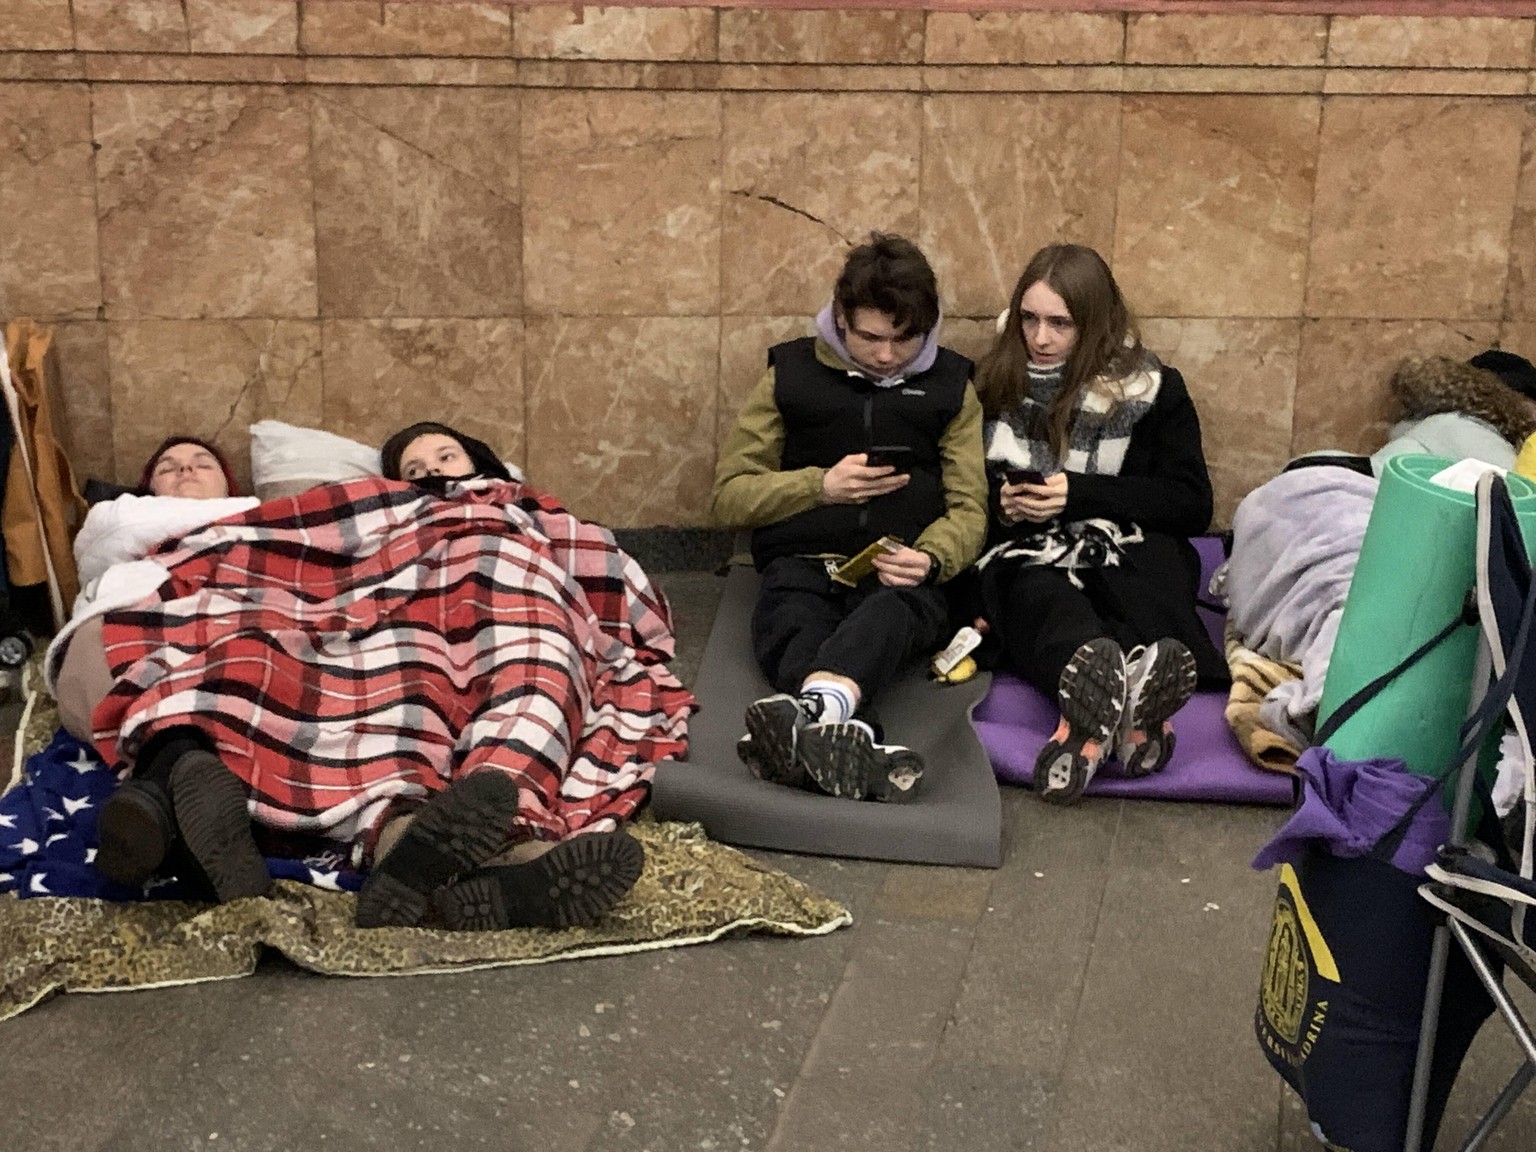 220225 -- KIEV, Feb. 25, 2022 -- People take shelter in a subway station in Kiev, capital of Ukraine, Feb. 25, 2022. Xinhua Headlines: Russia-Ukraine conflicts intensify, sending shock waves across wo ...